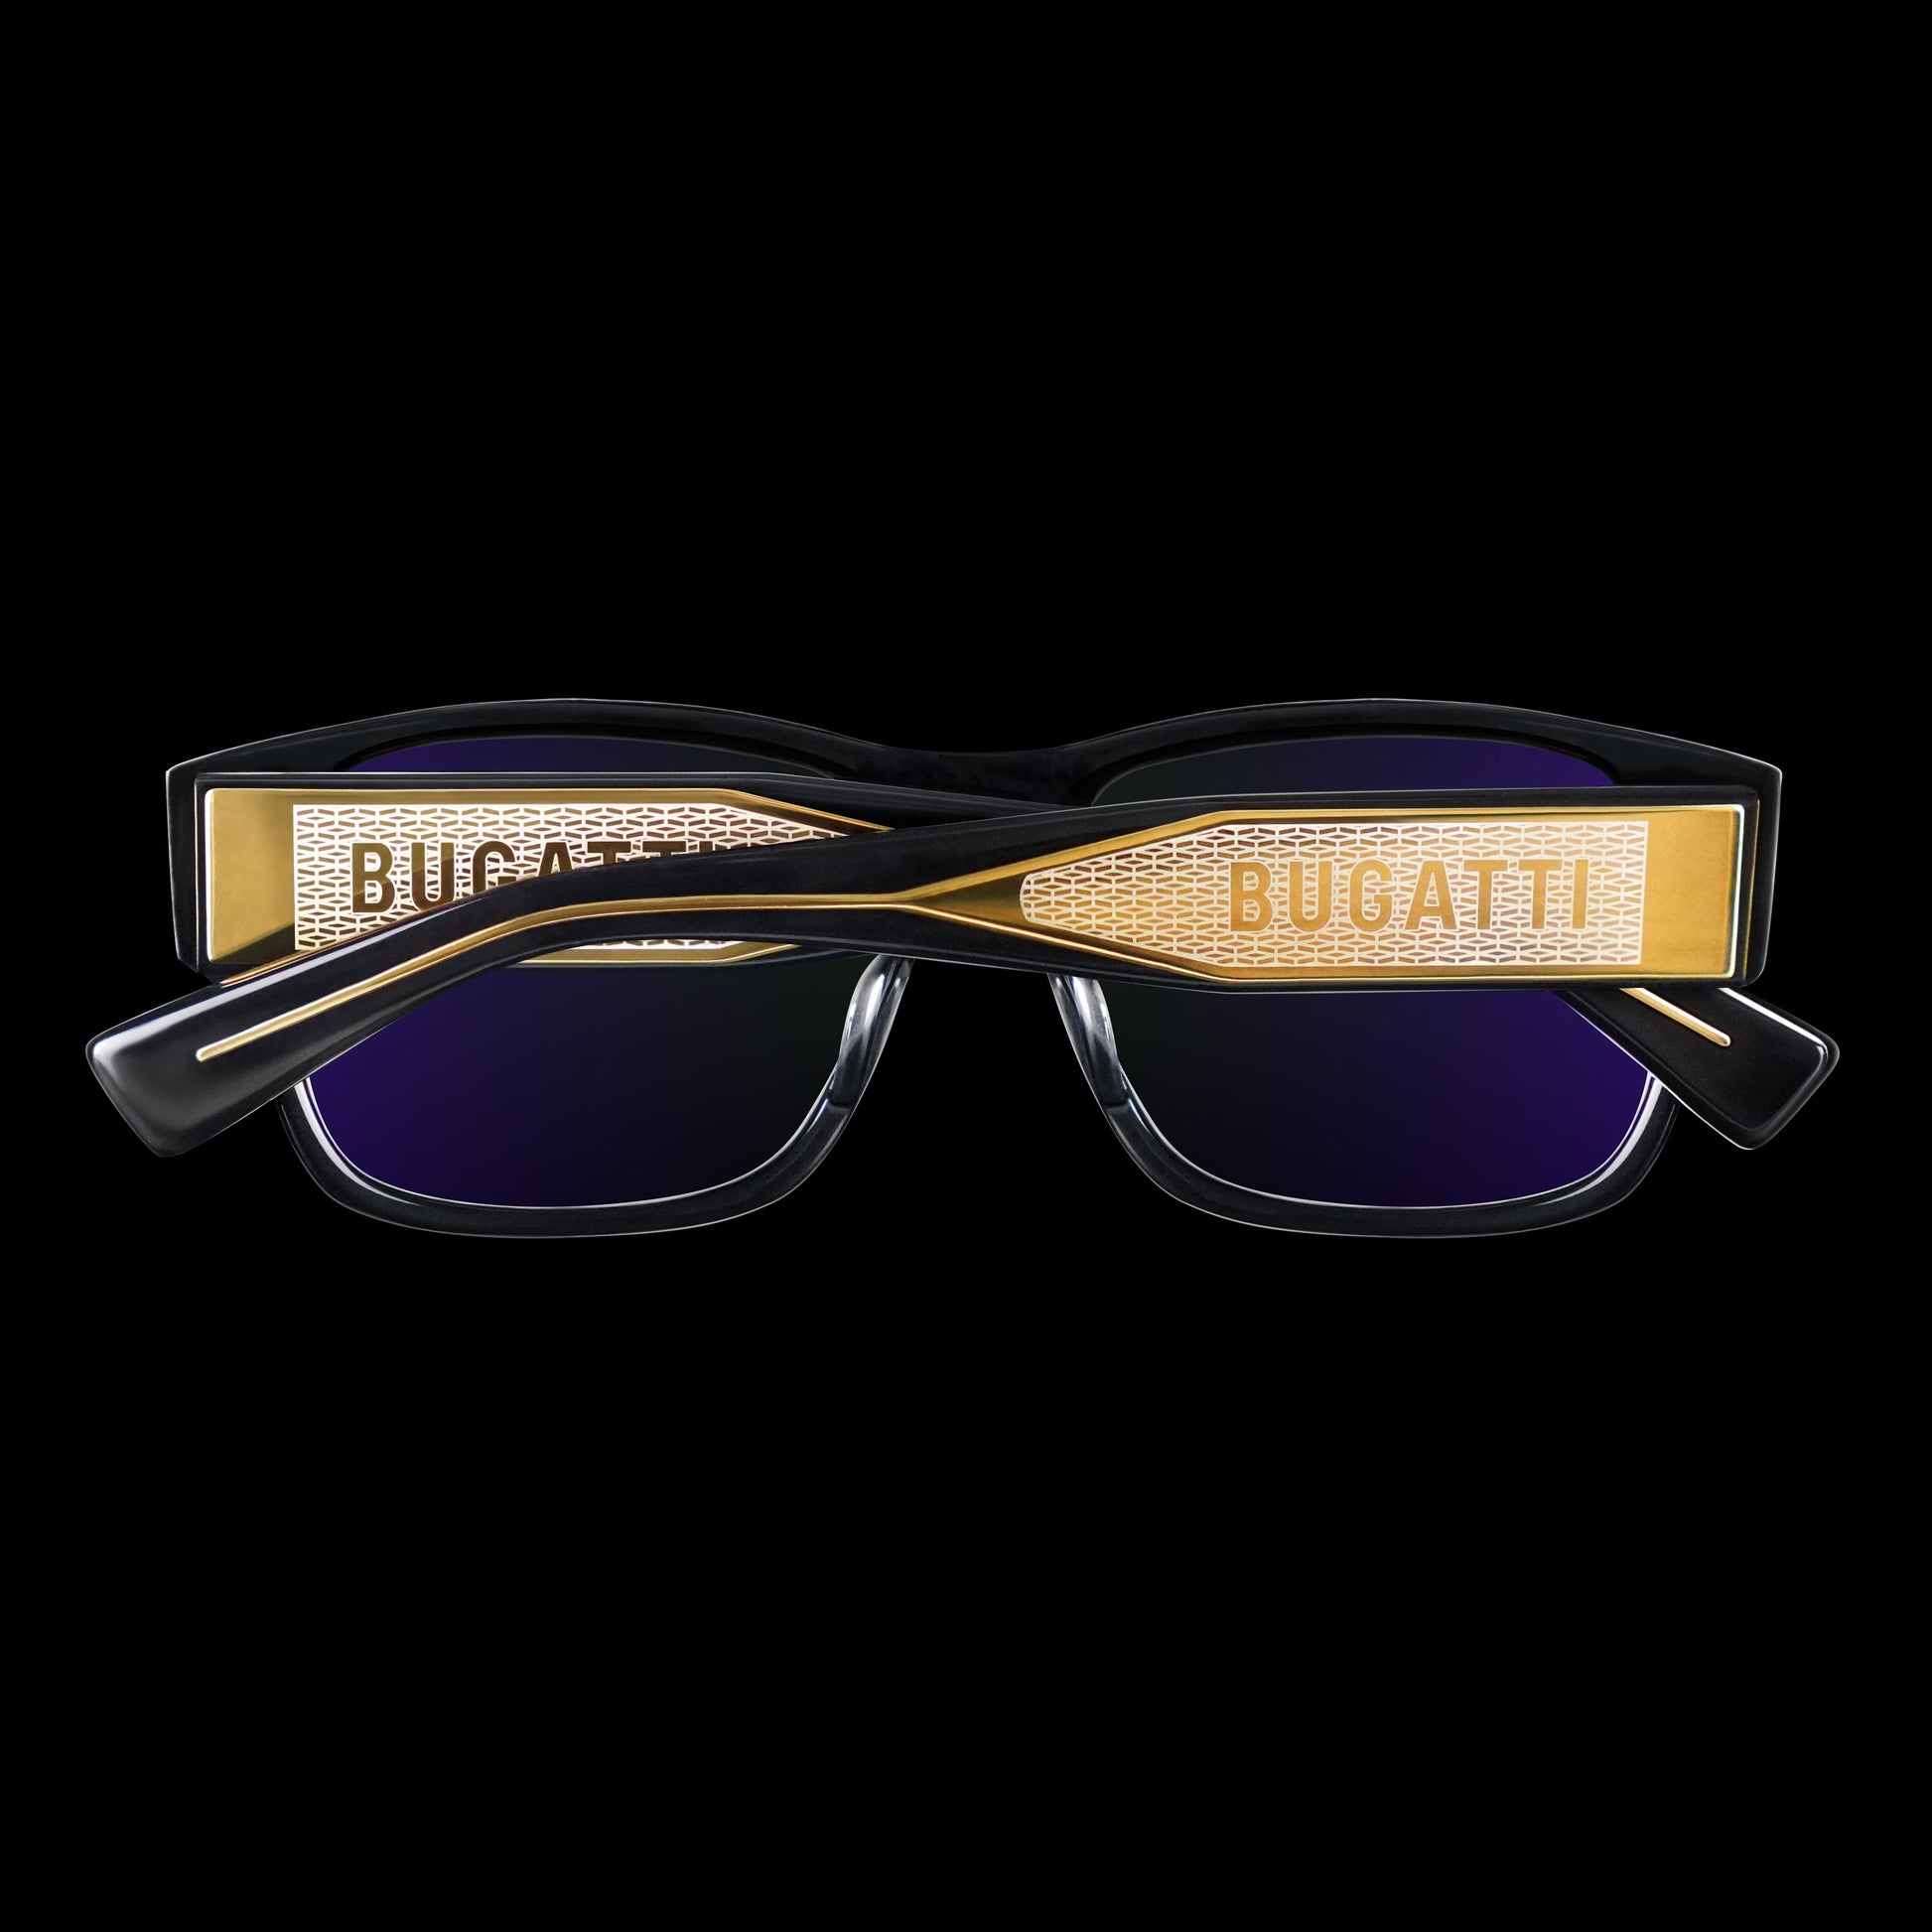 Collection BUGATTI 12 Eyewear Eyewear – Model BUGATTI